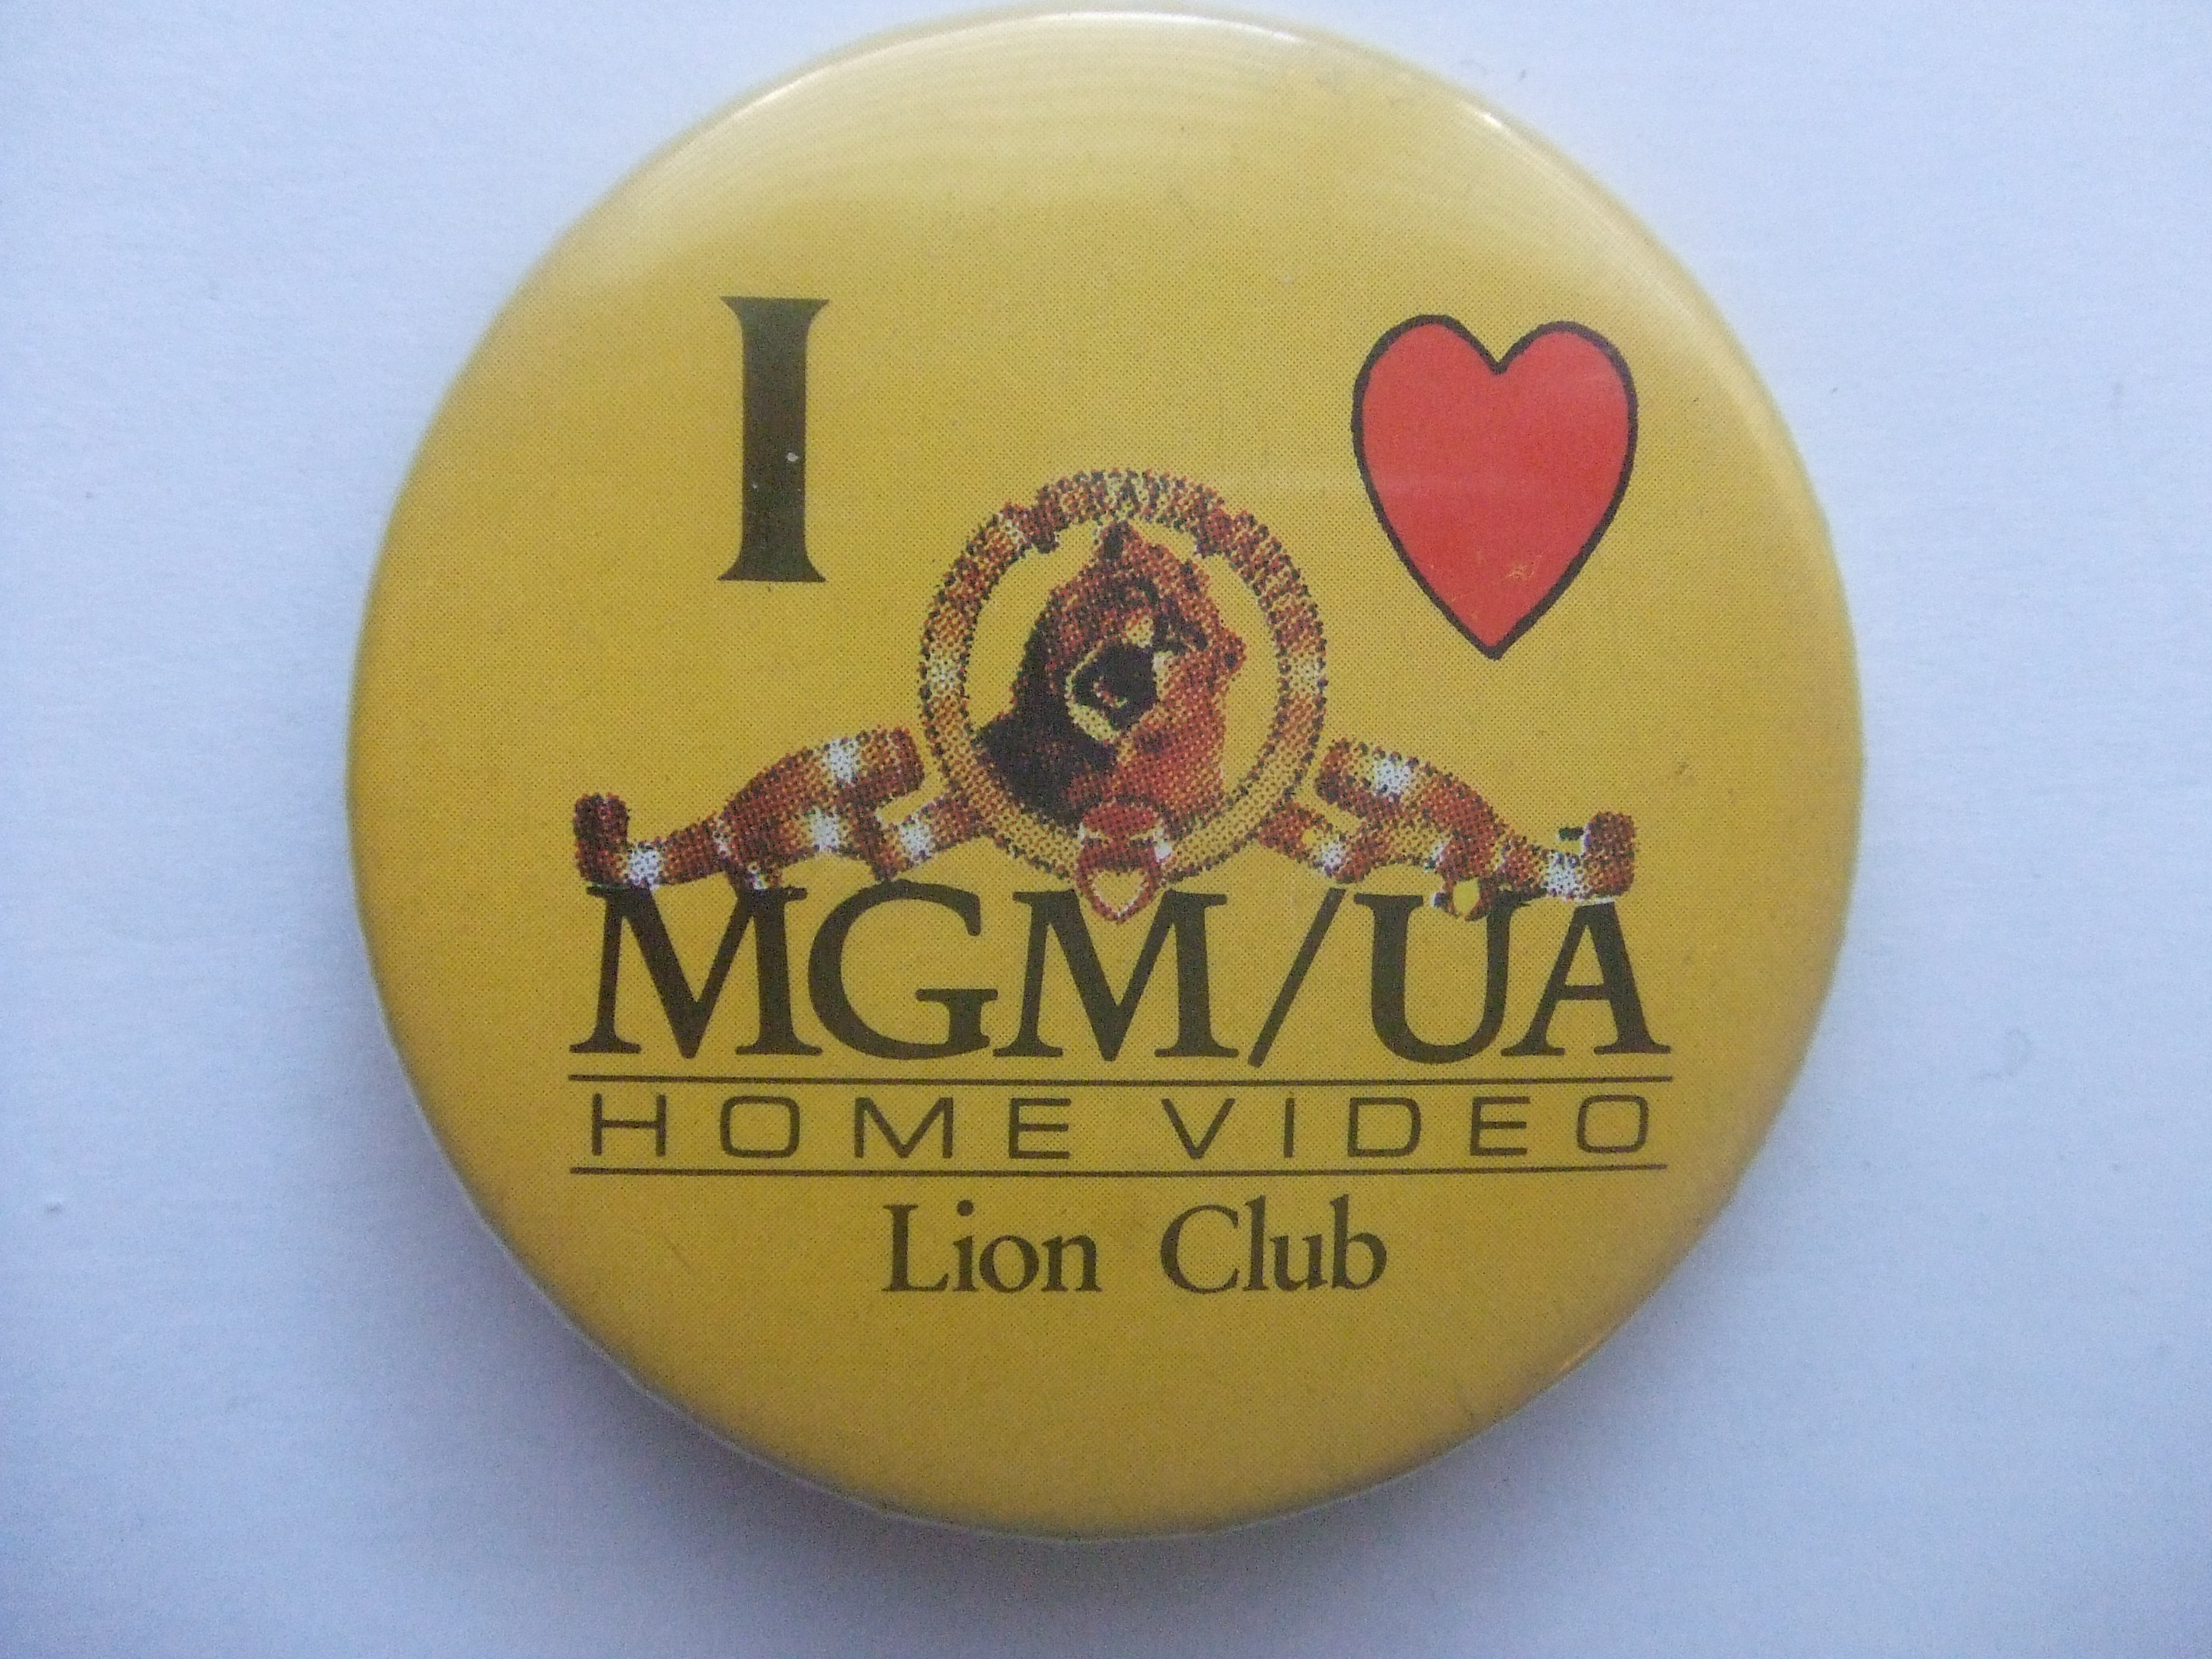 MGM ua home video Lions Club